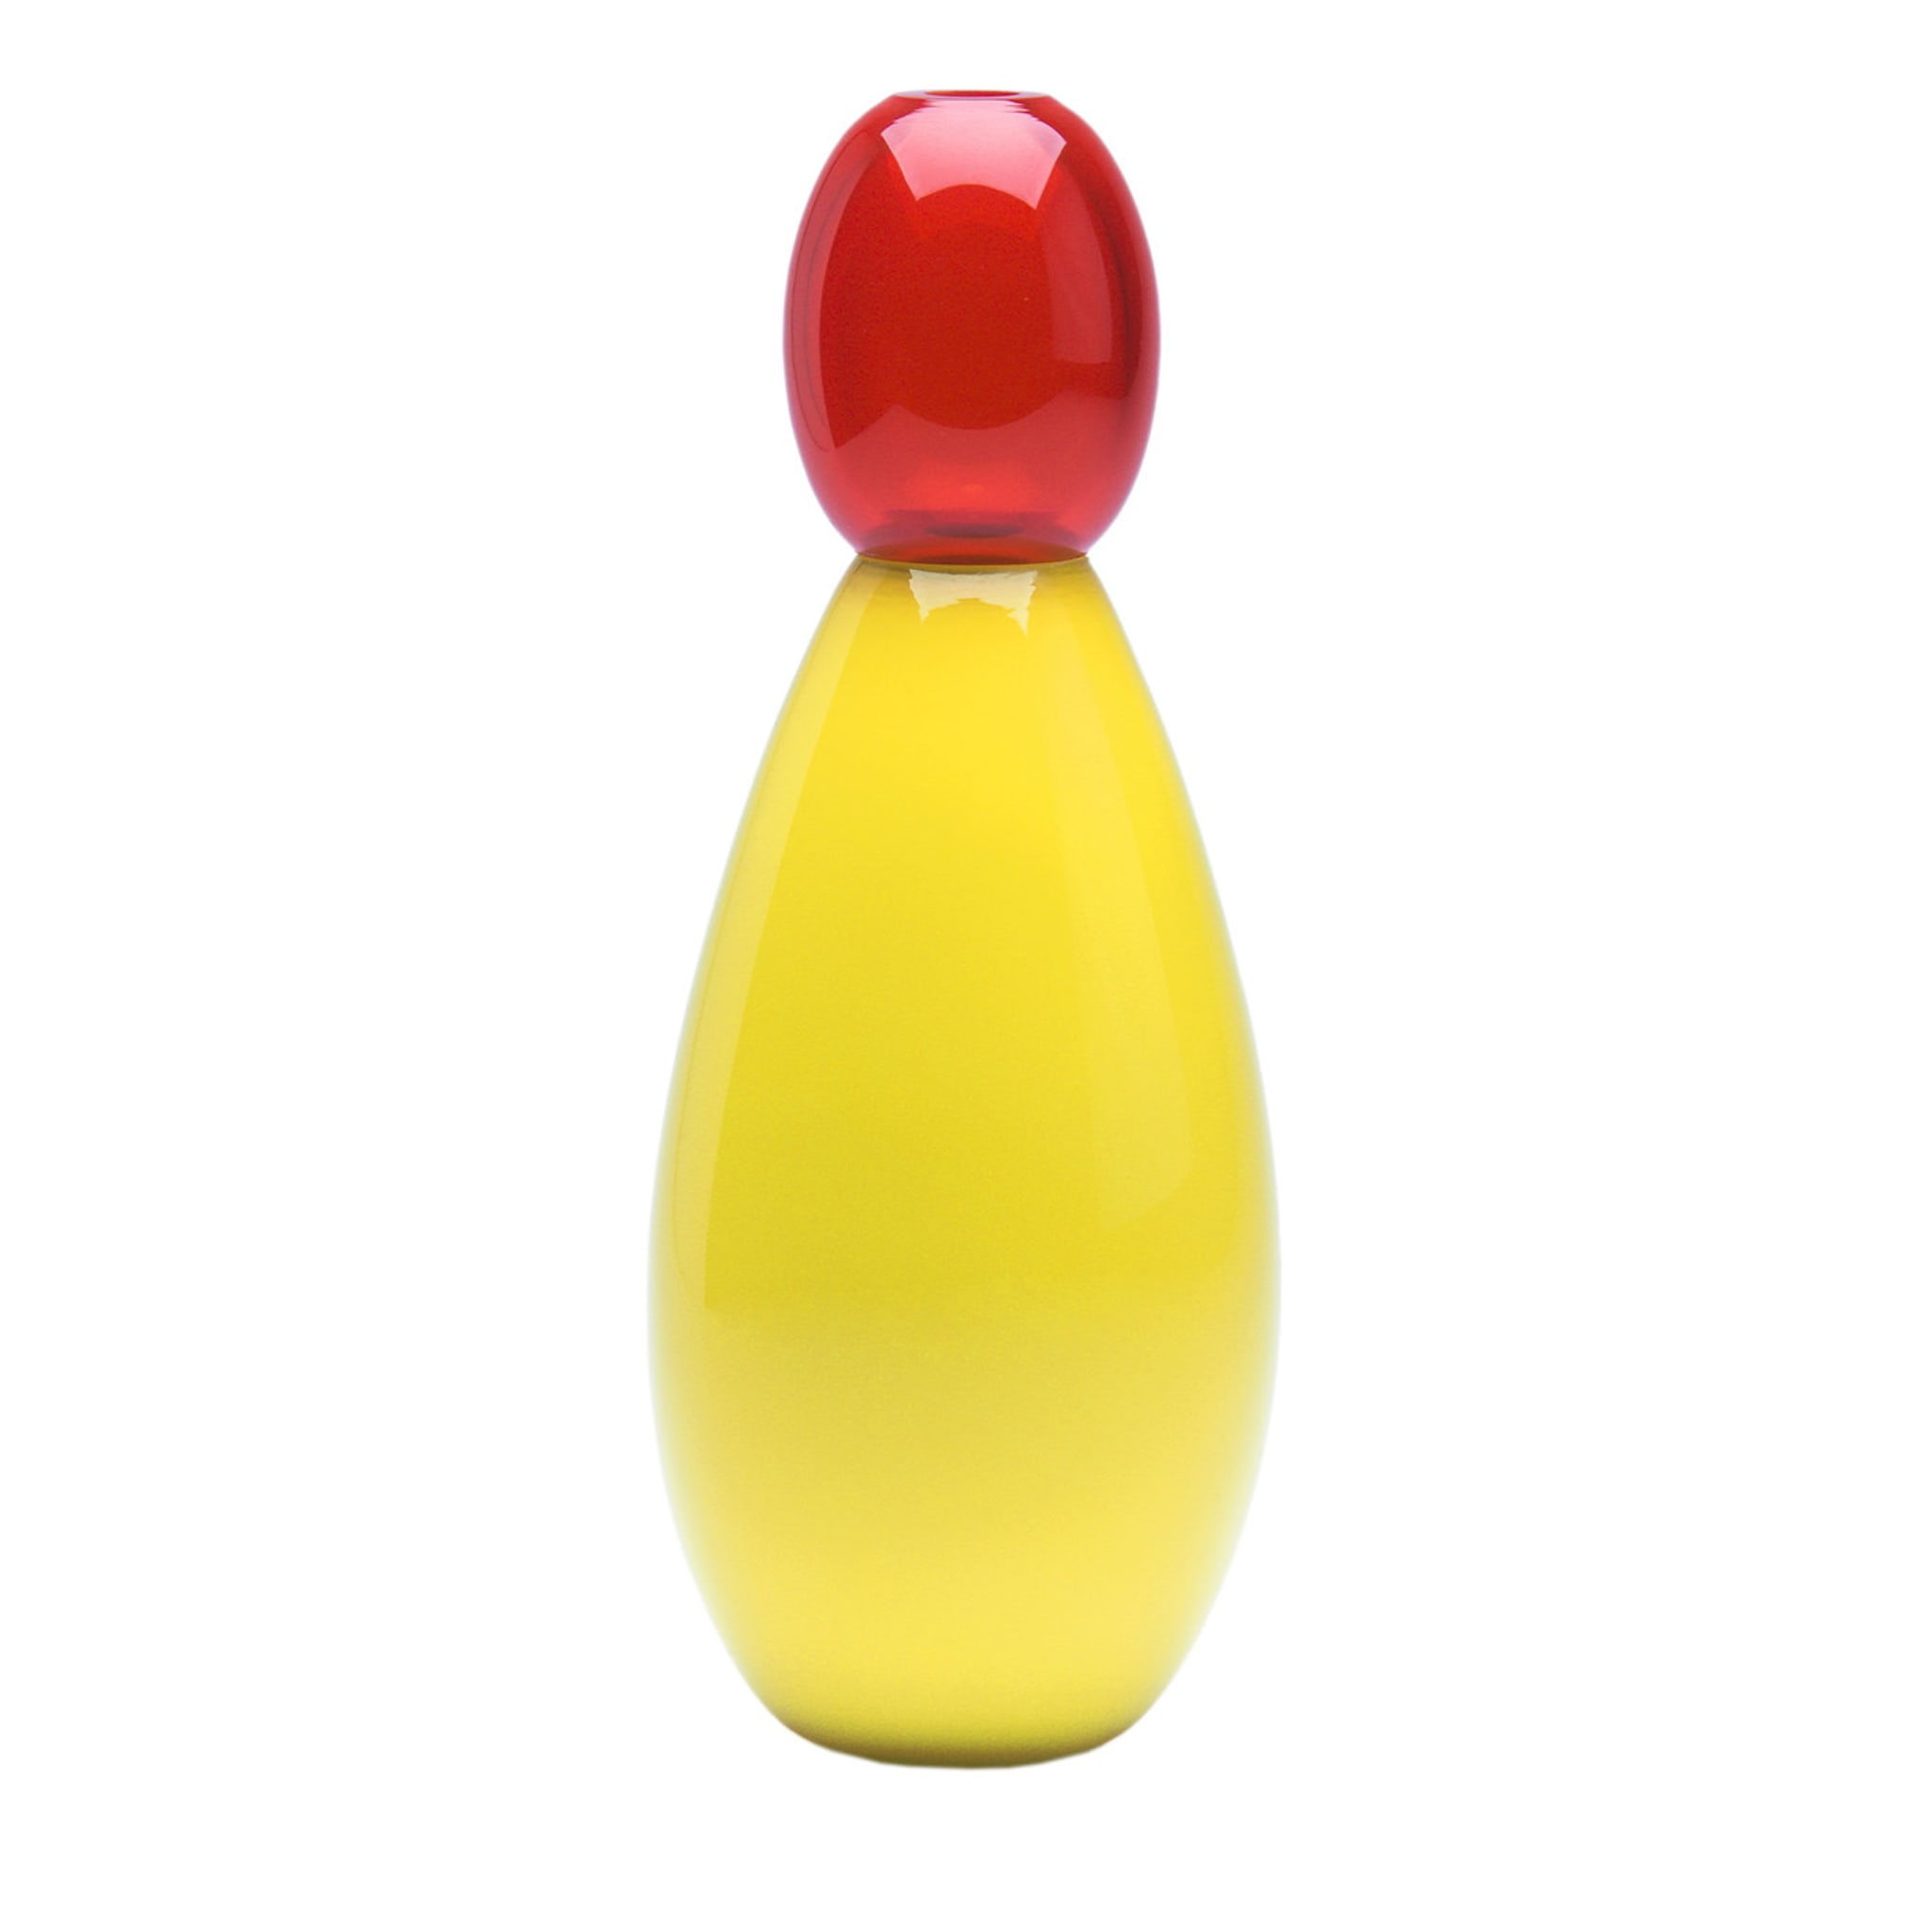 Vase King rouge-jaune par Karim Rashid - Vue principale